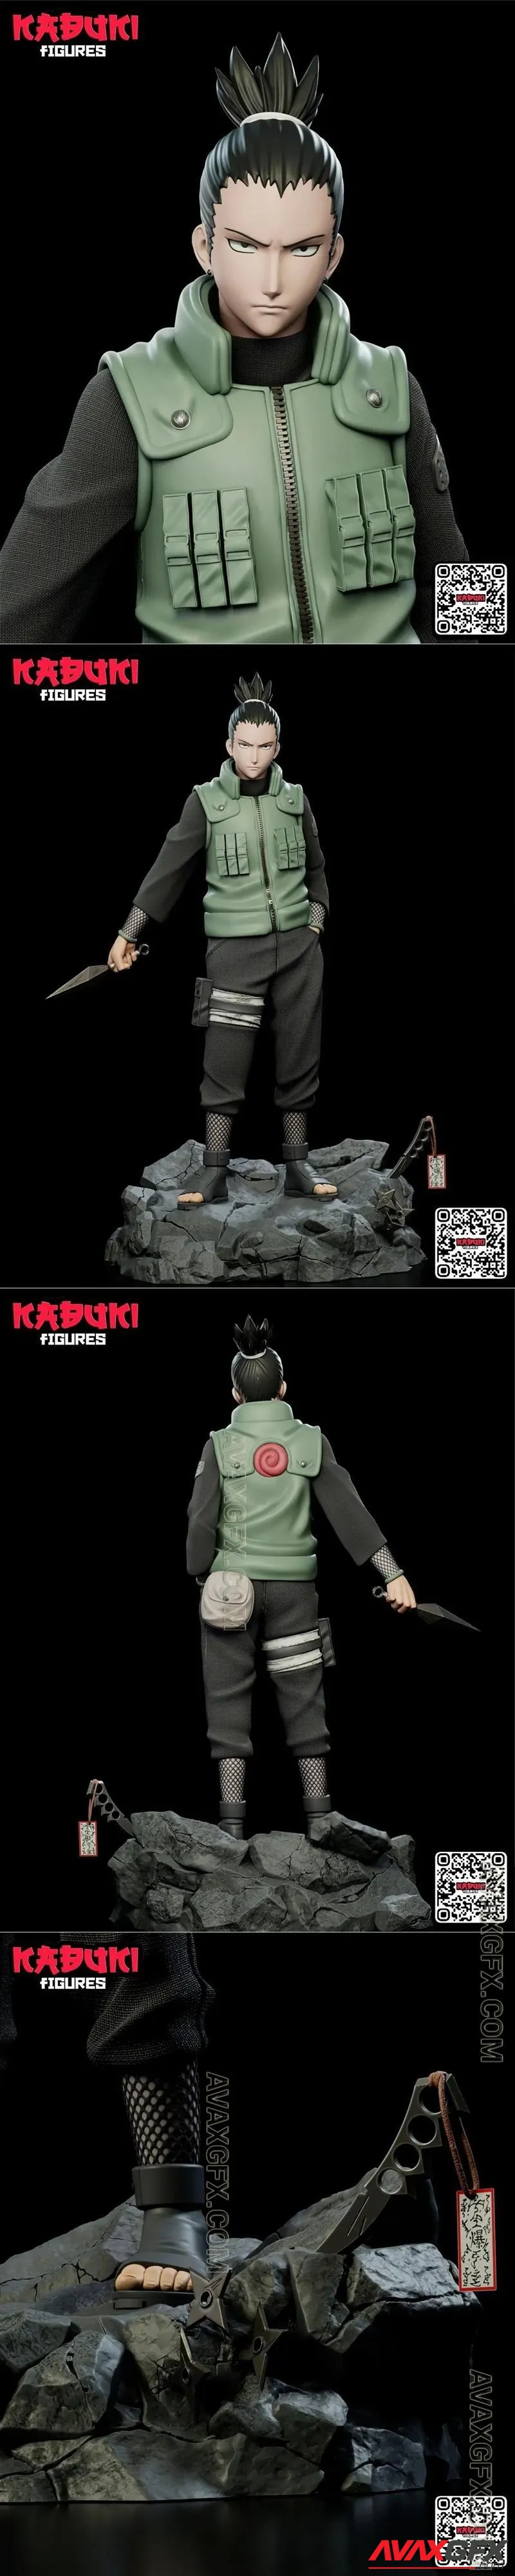 Kabuki Figures - Shikamaru - STL 3D Model